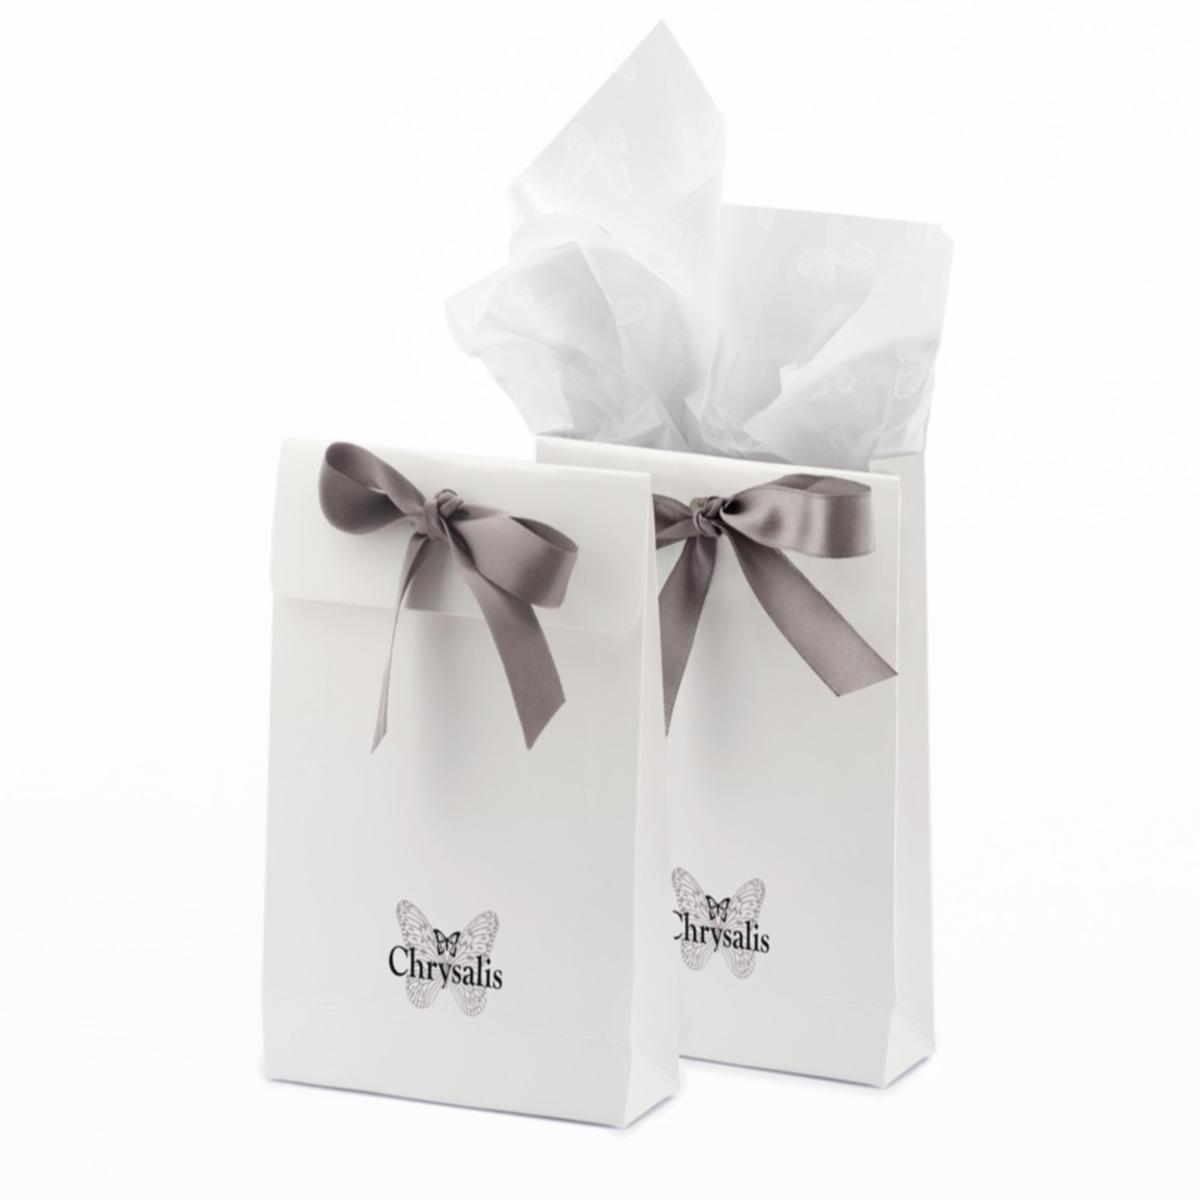 chrysalis-emballage-packaging-paquet-cadeau-bracelet-jonc-femme